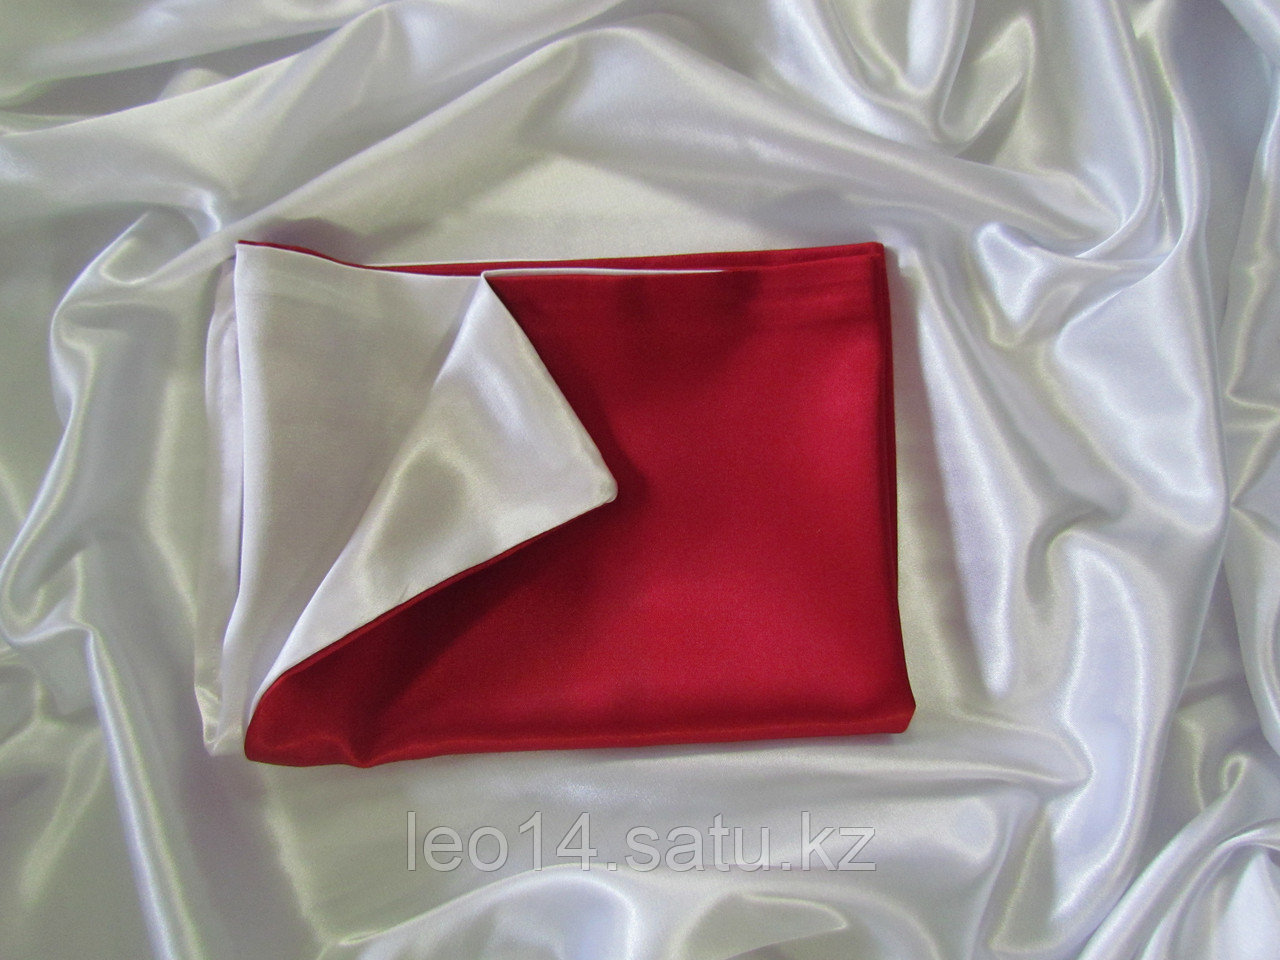 Наволочка двухцветная (бело-красная) для сублимации, 20х30 см, атлас